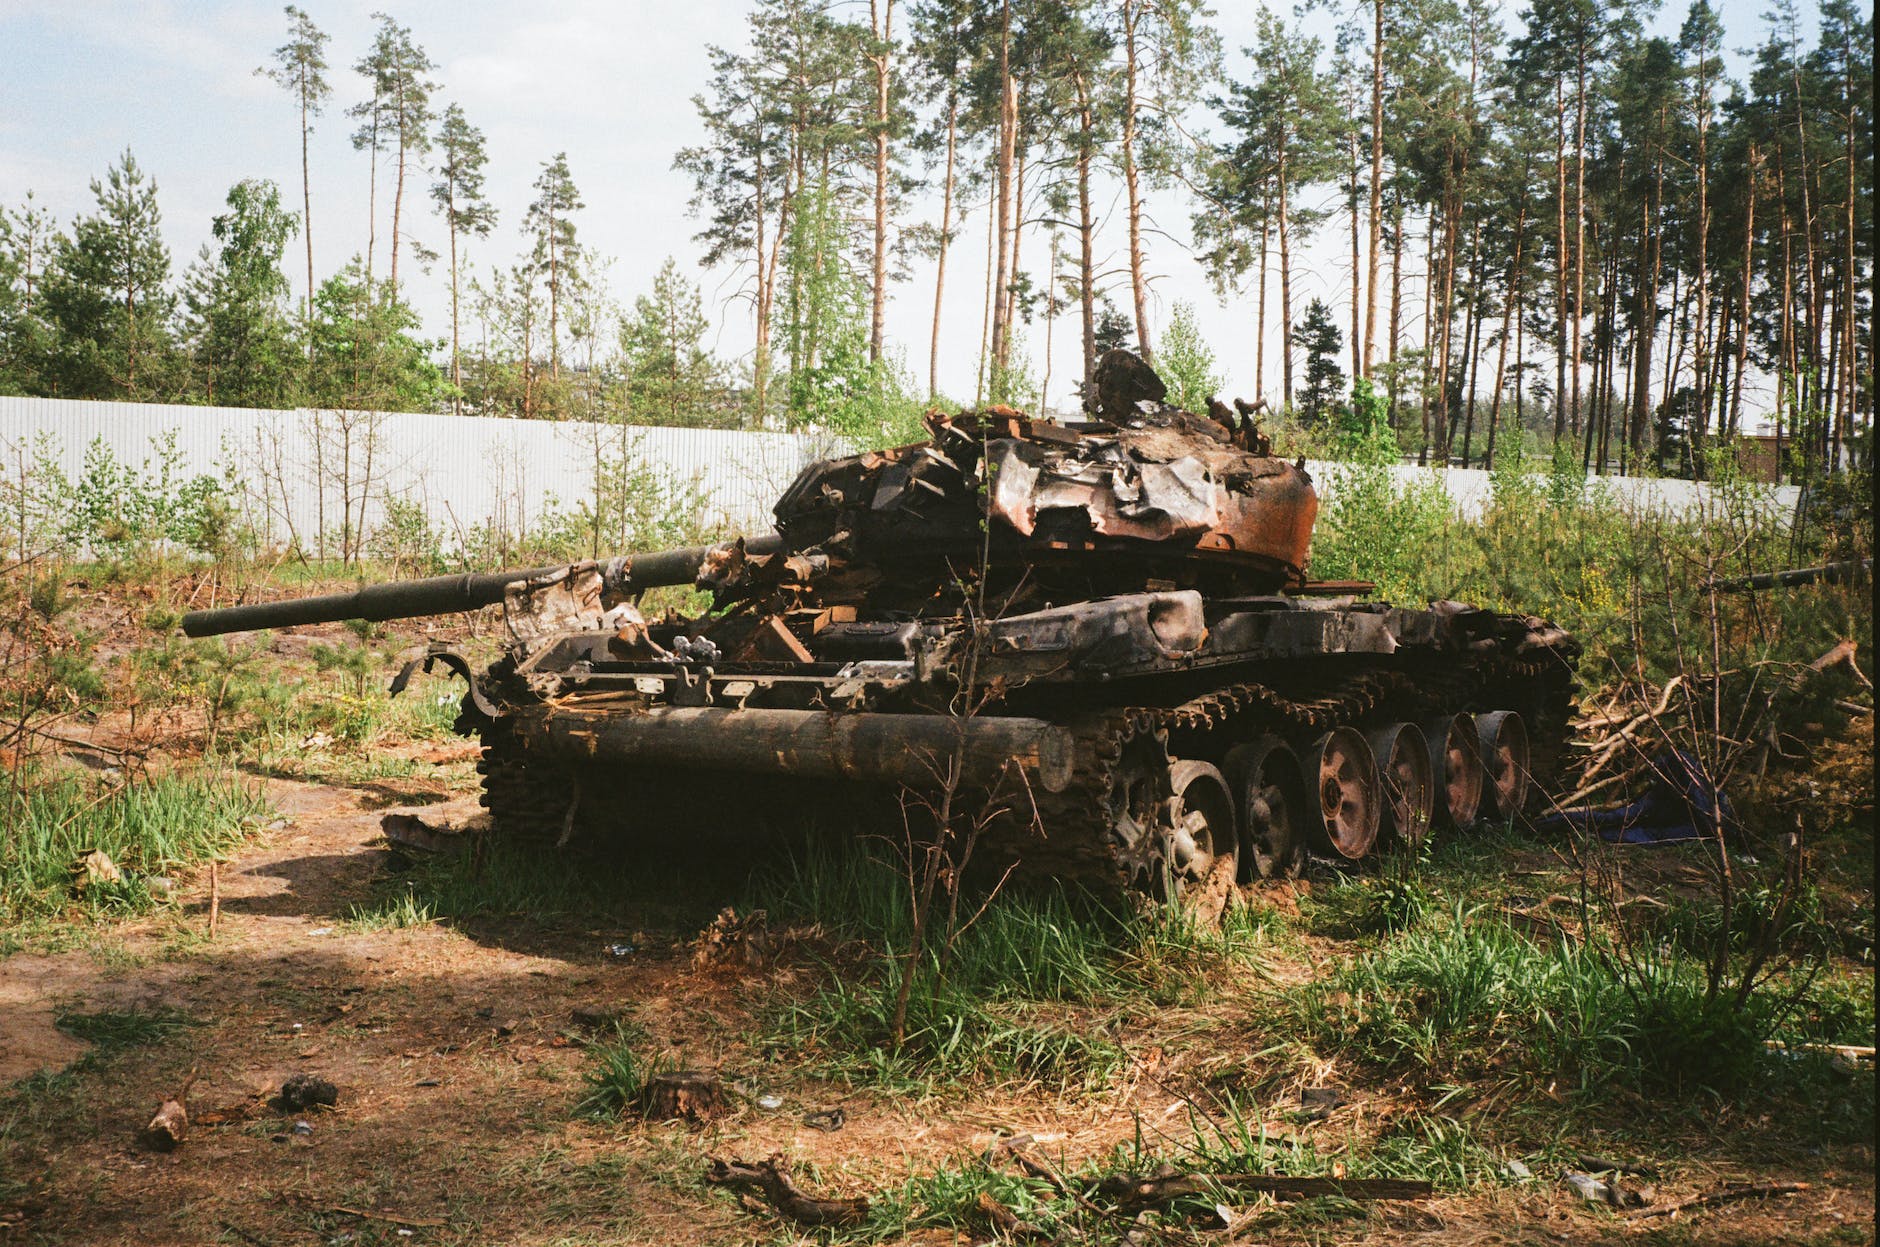 Panzer Kaserne Armor in 1975